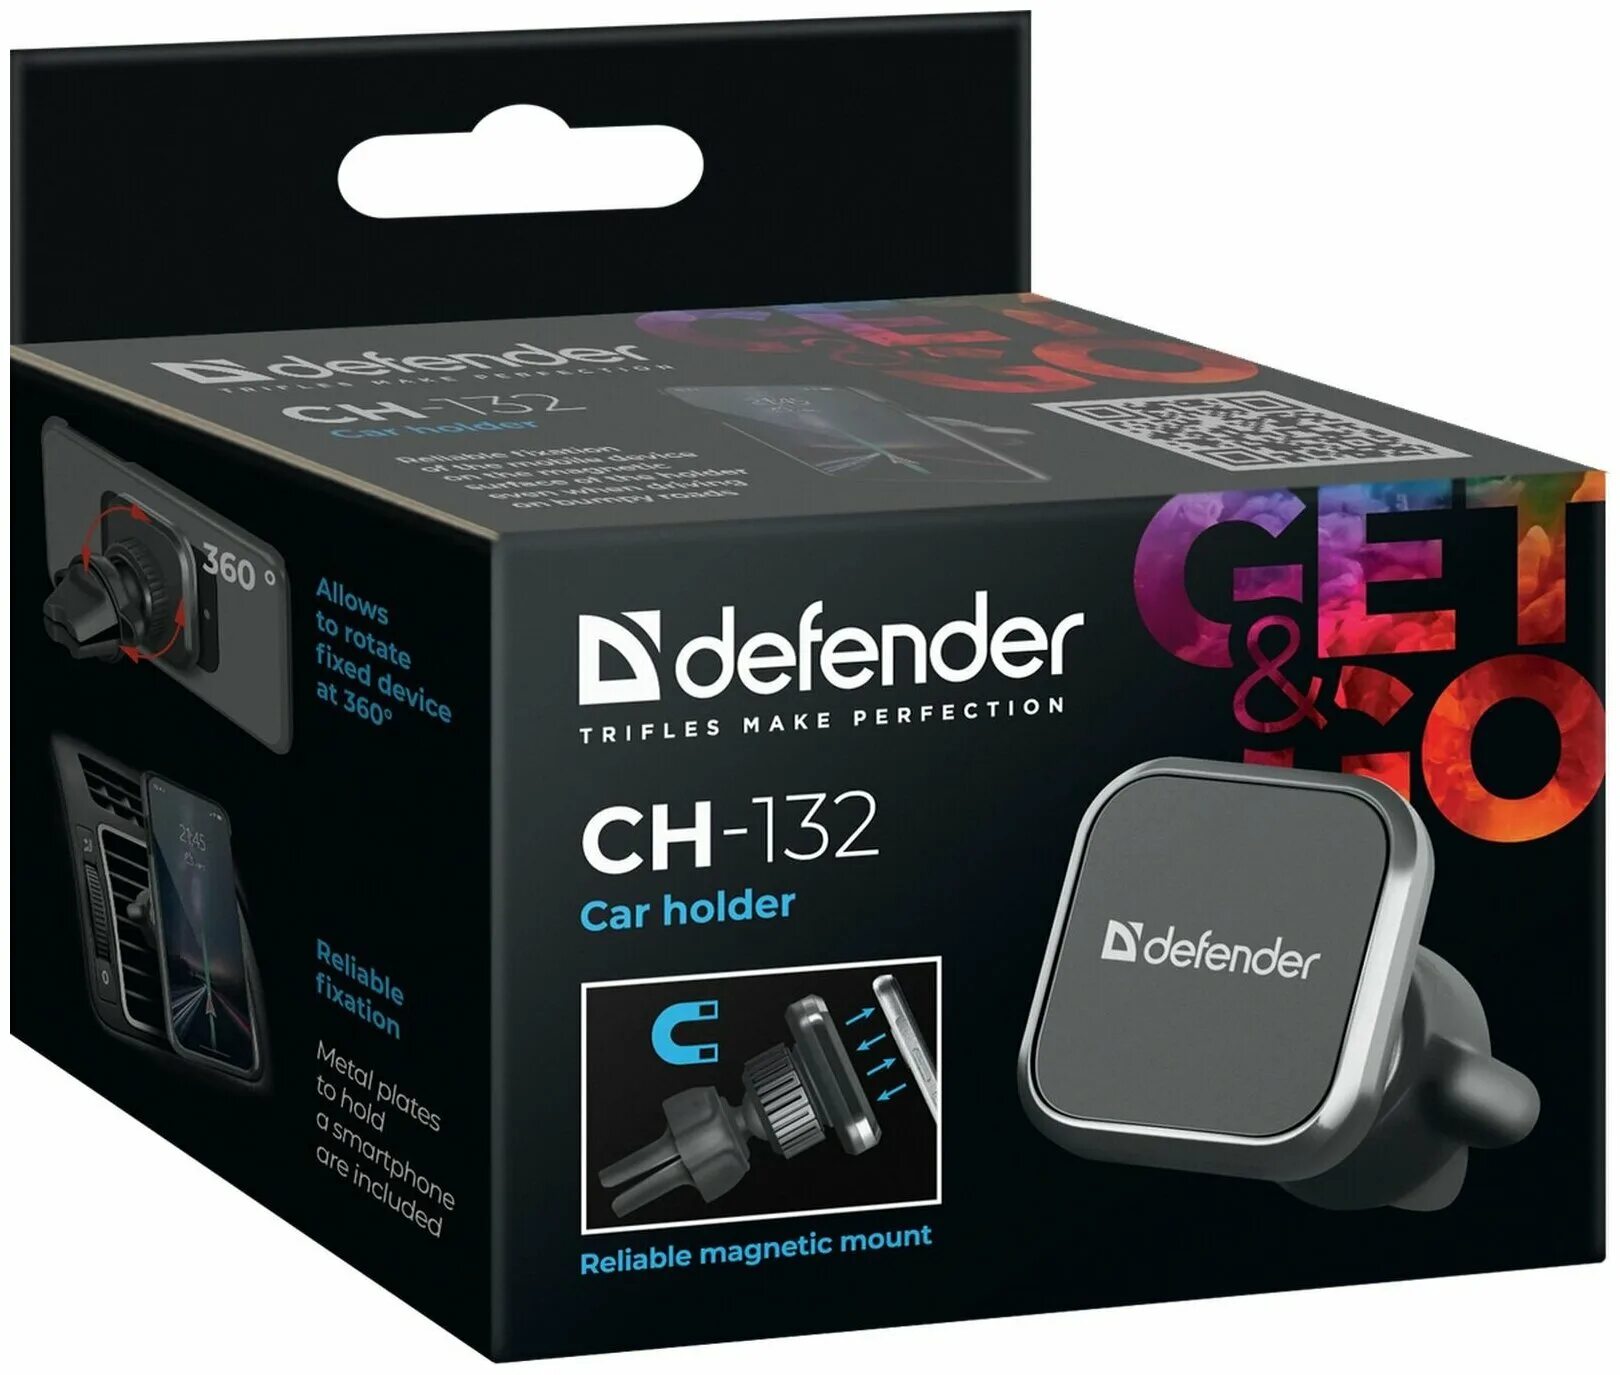 Defender ch. Defender автомобильный держатель Ch-136. Автомобильный держатель Defender Ch-128 магнит. Defender держатель для телефона в авто машину магнитный. Defender магнитный.